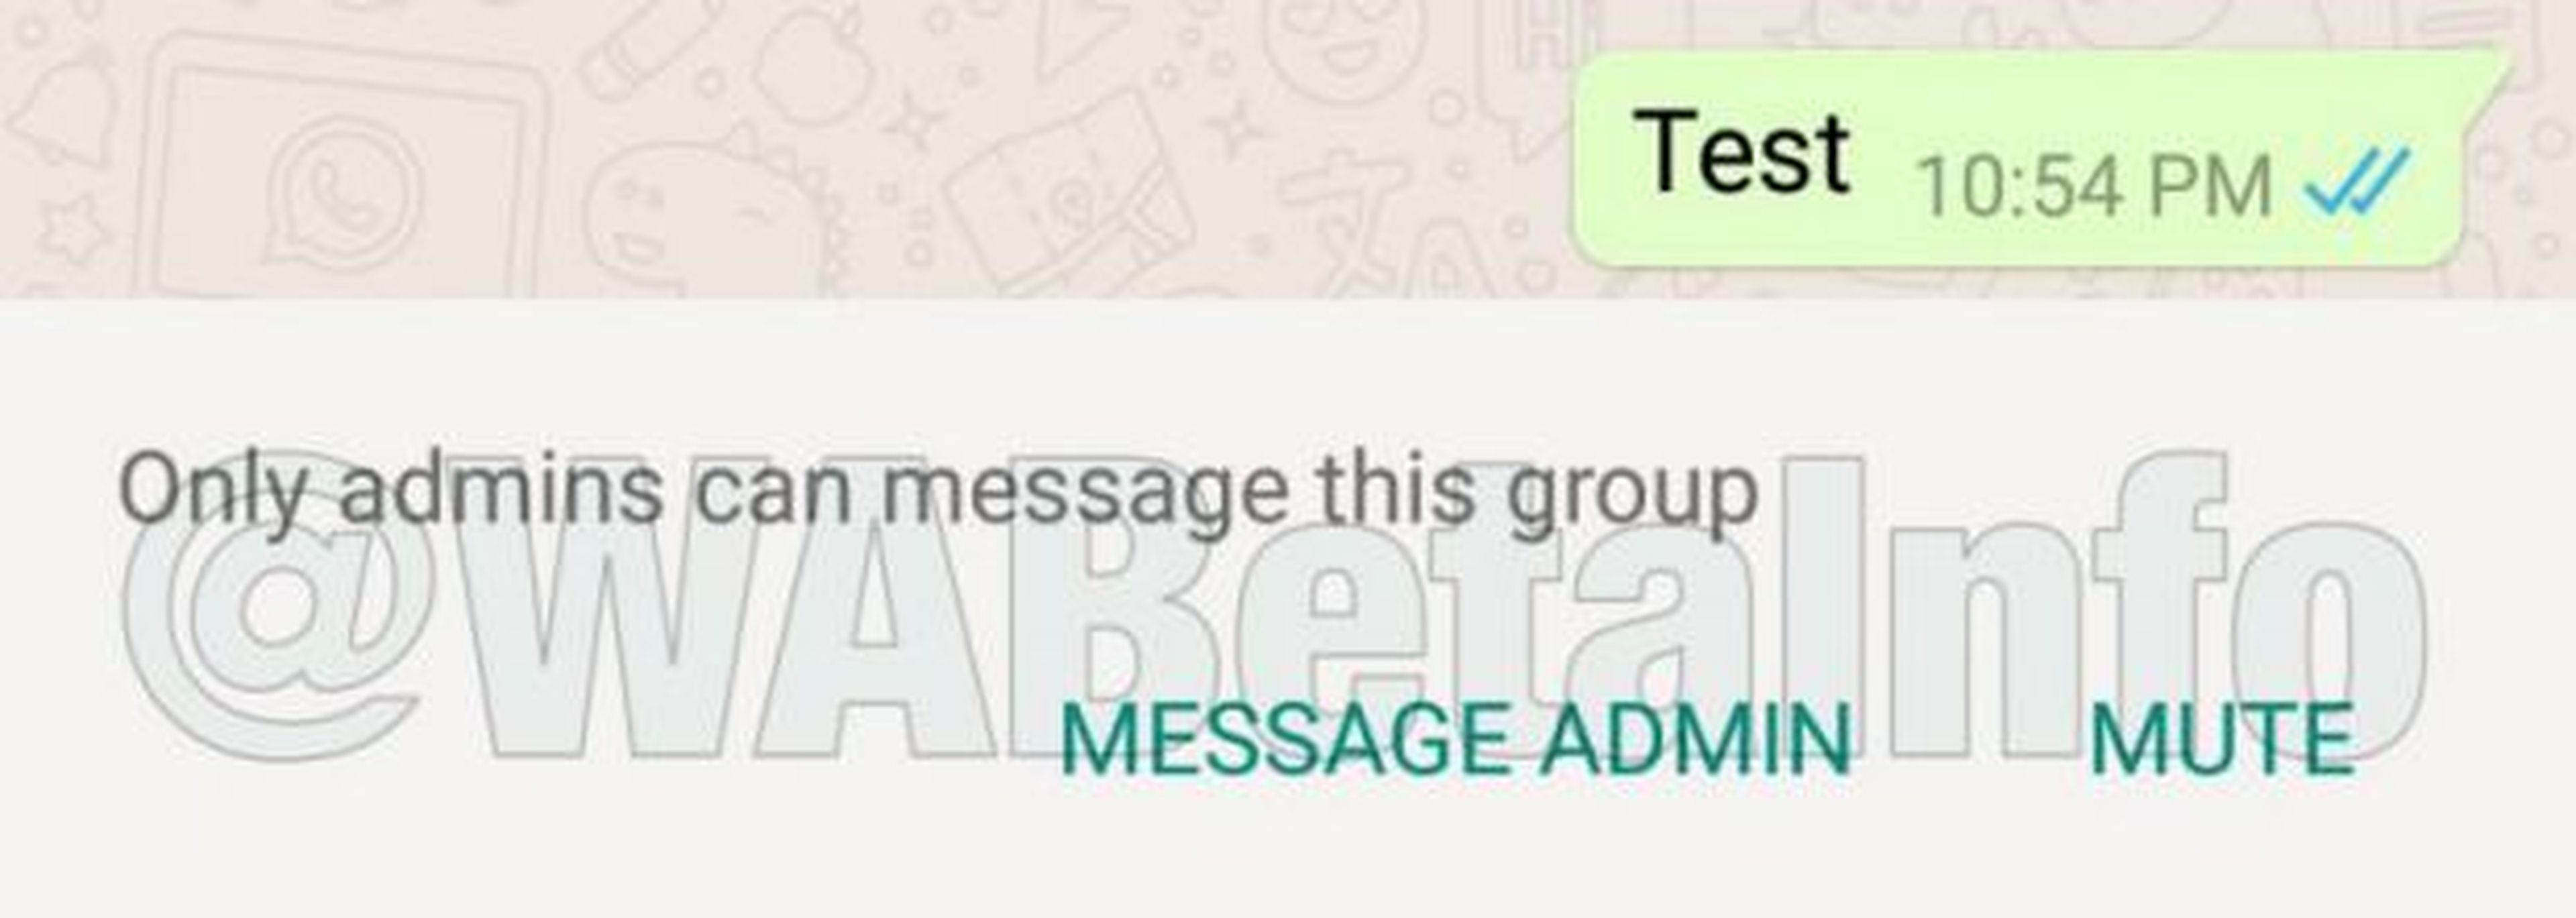 Grupos restringidos whatsapp